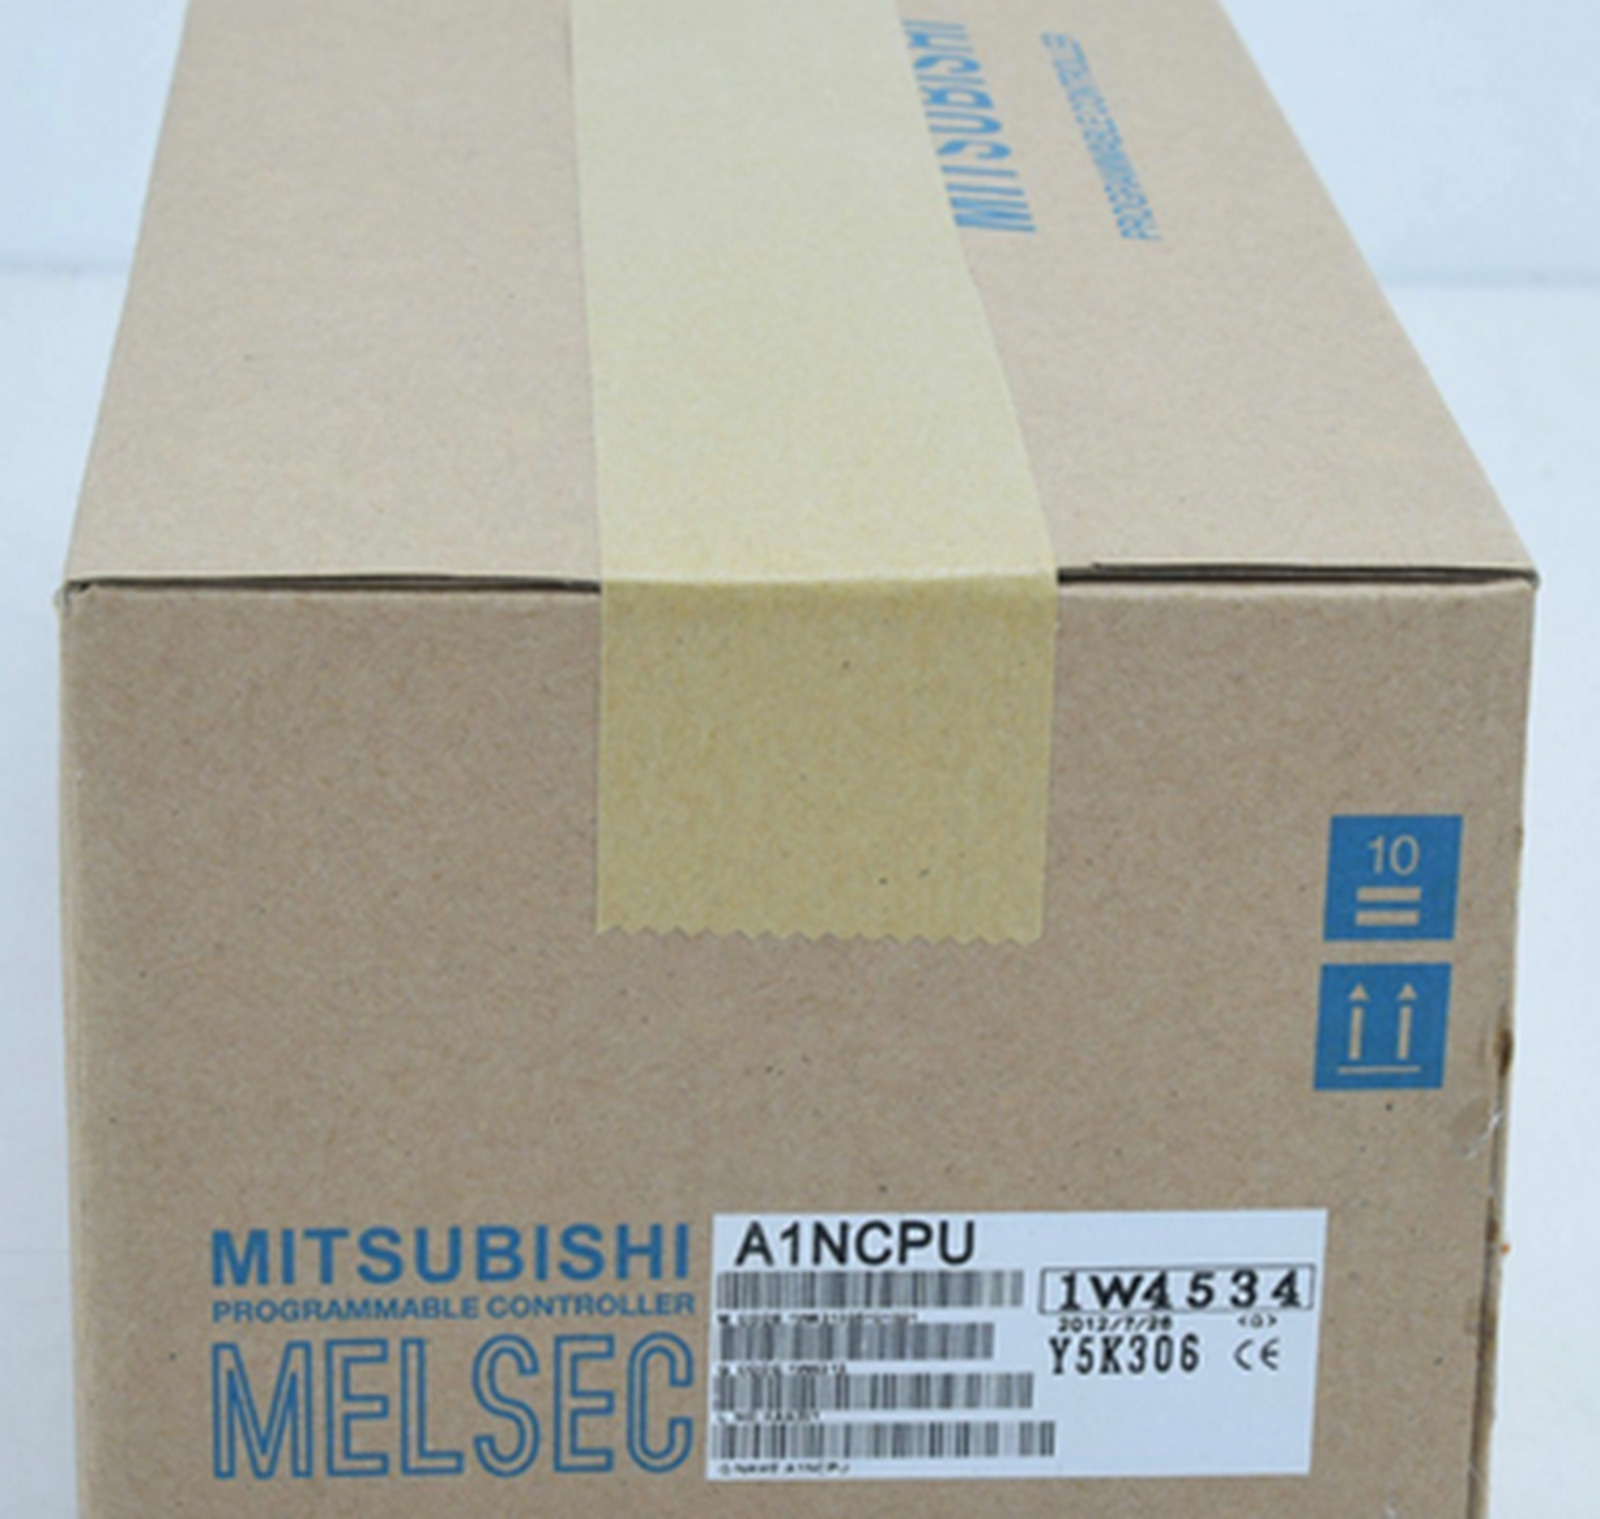 NEW Mitsubishi A1NCPU PLC Module